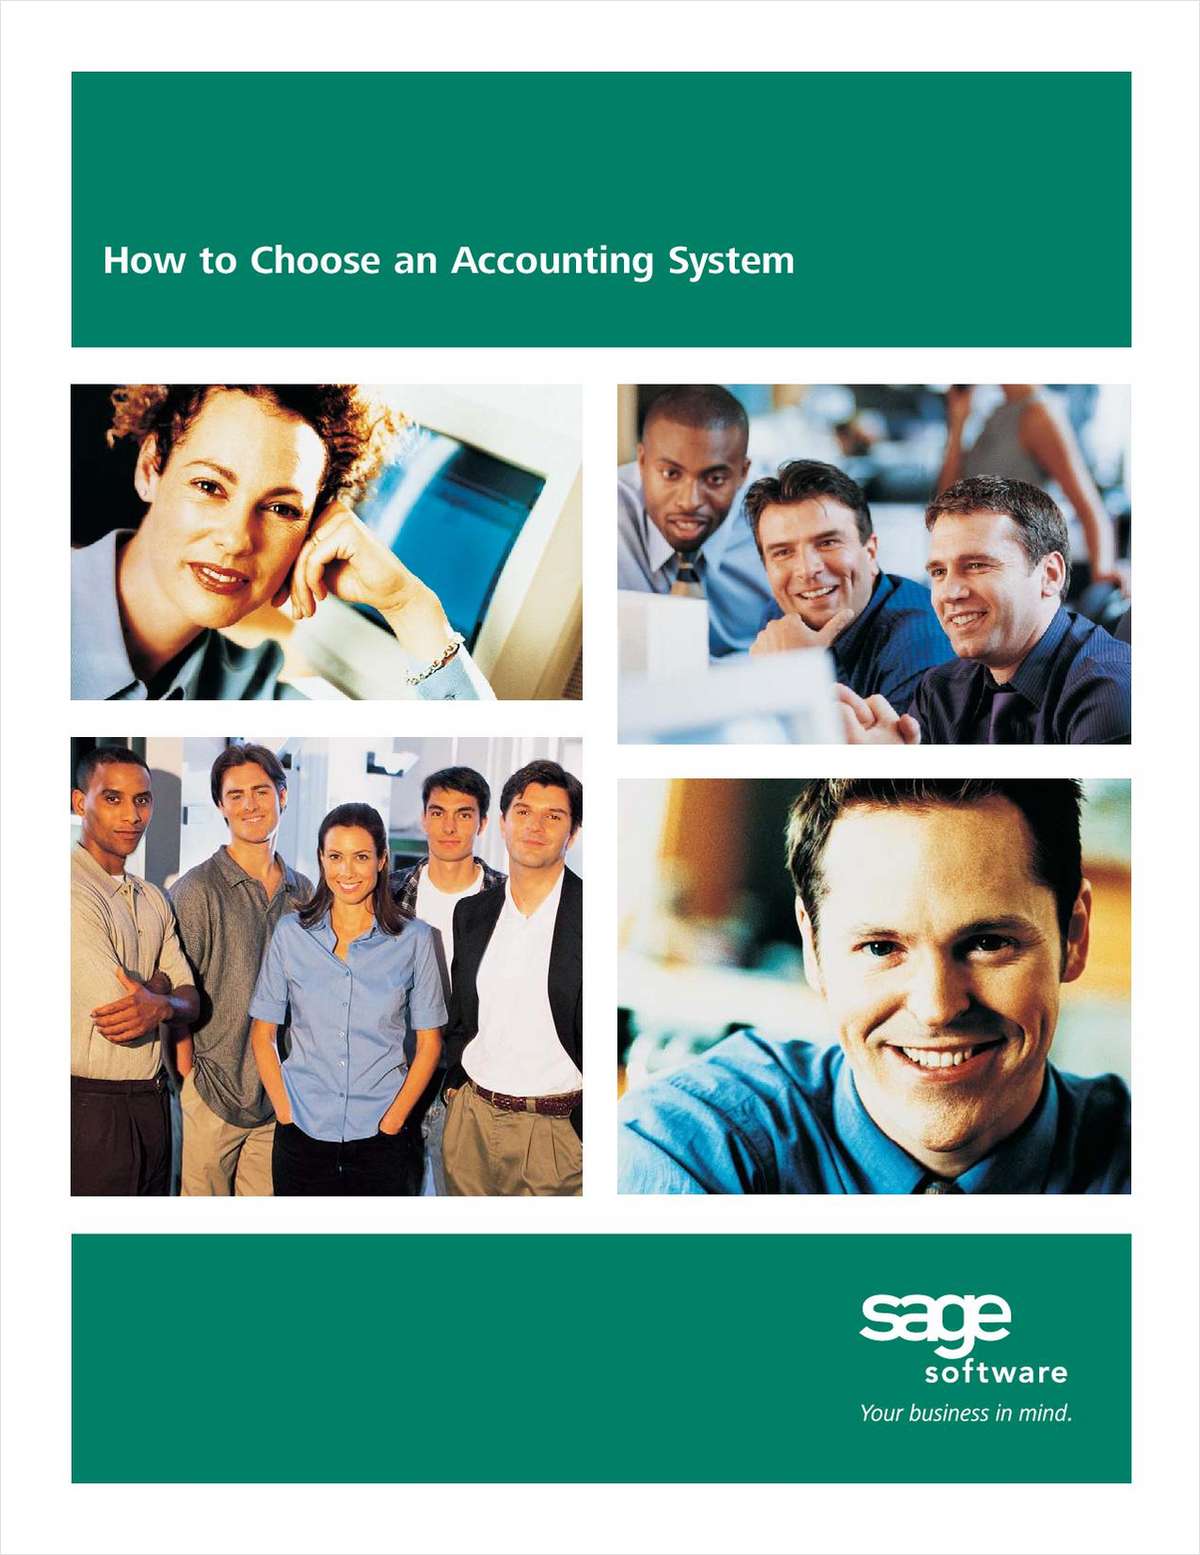 Choosing an Accounting System